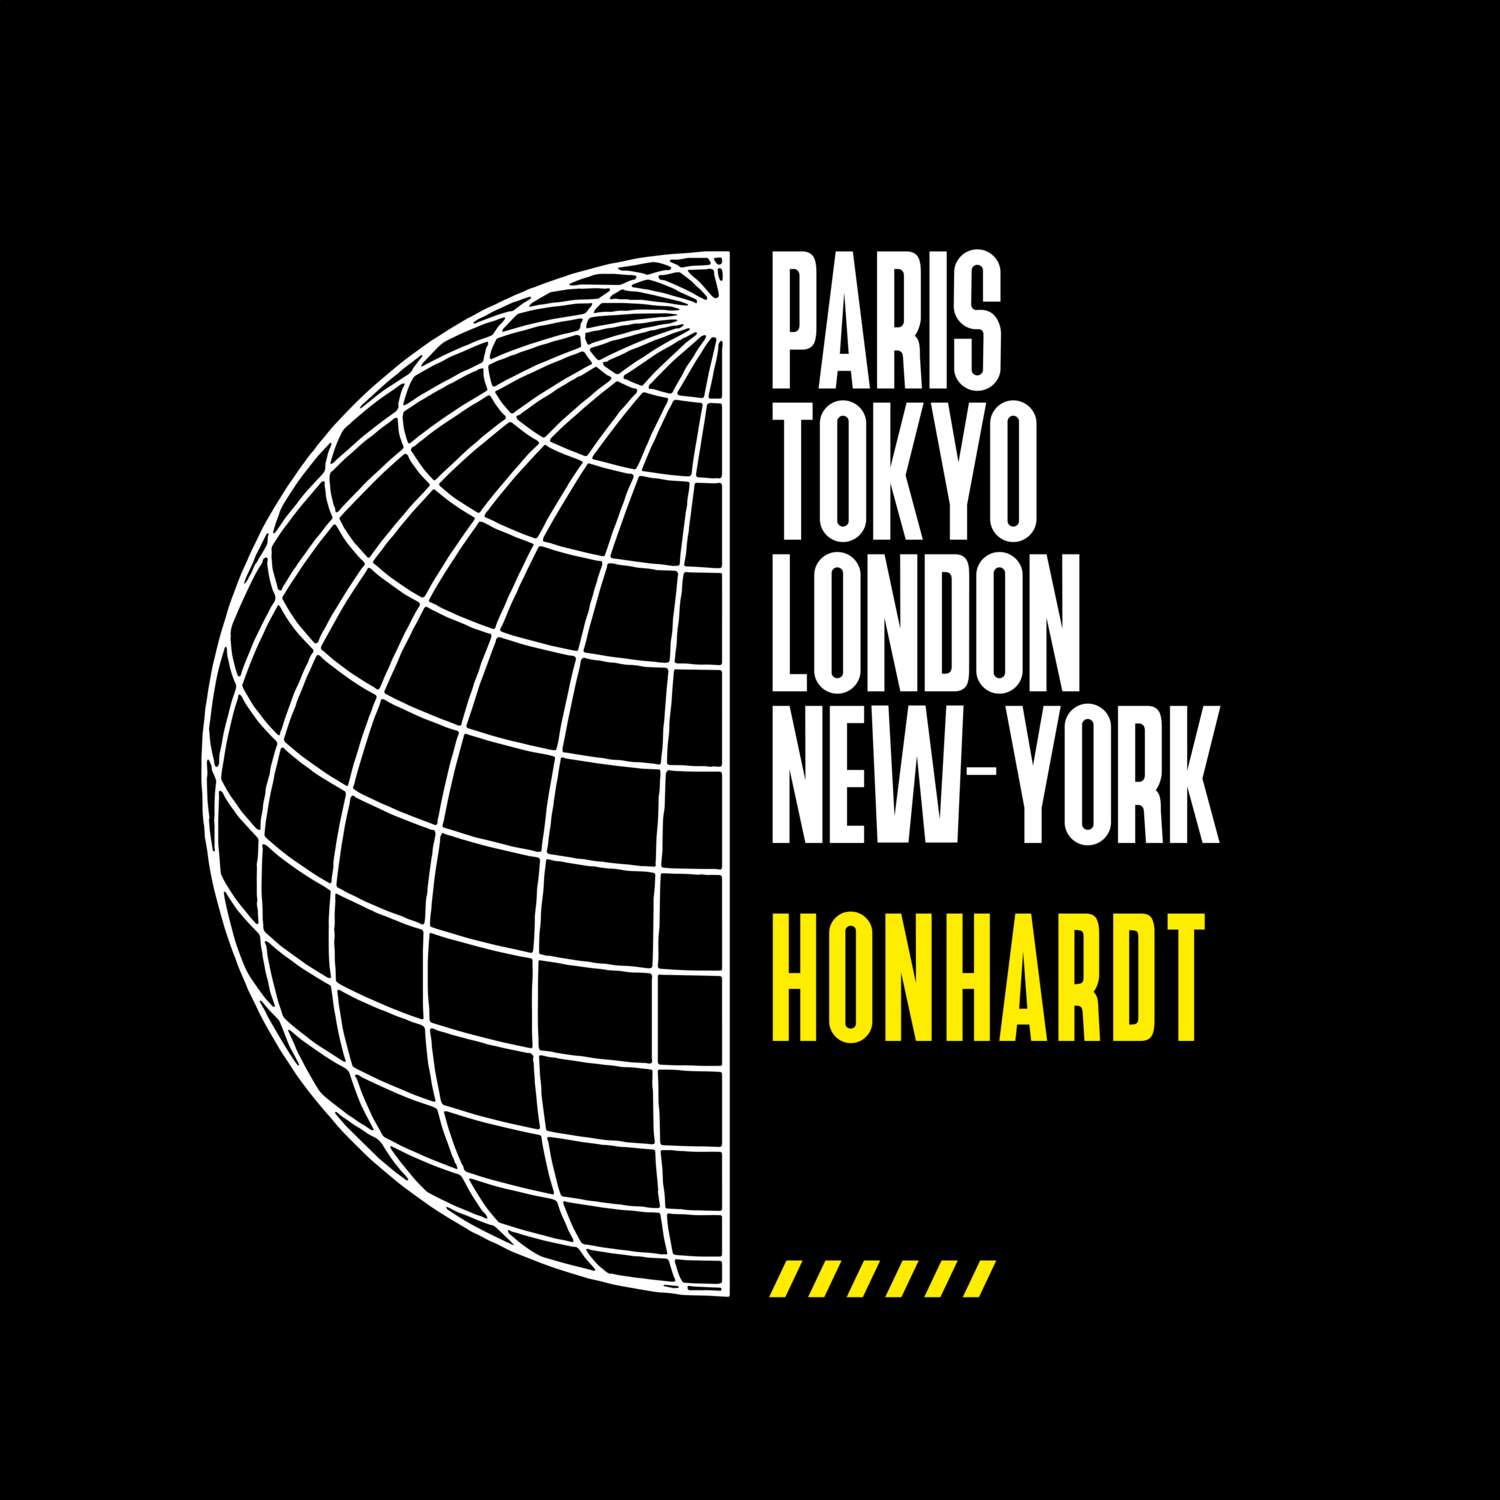 Honhardt T-Shirt »Paris Tokyo London«